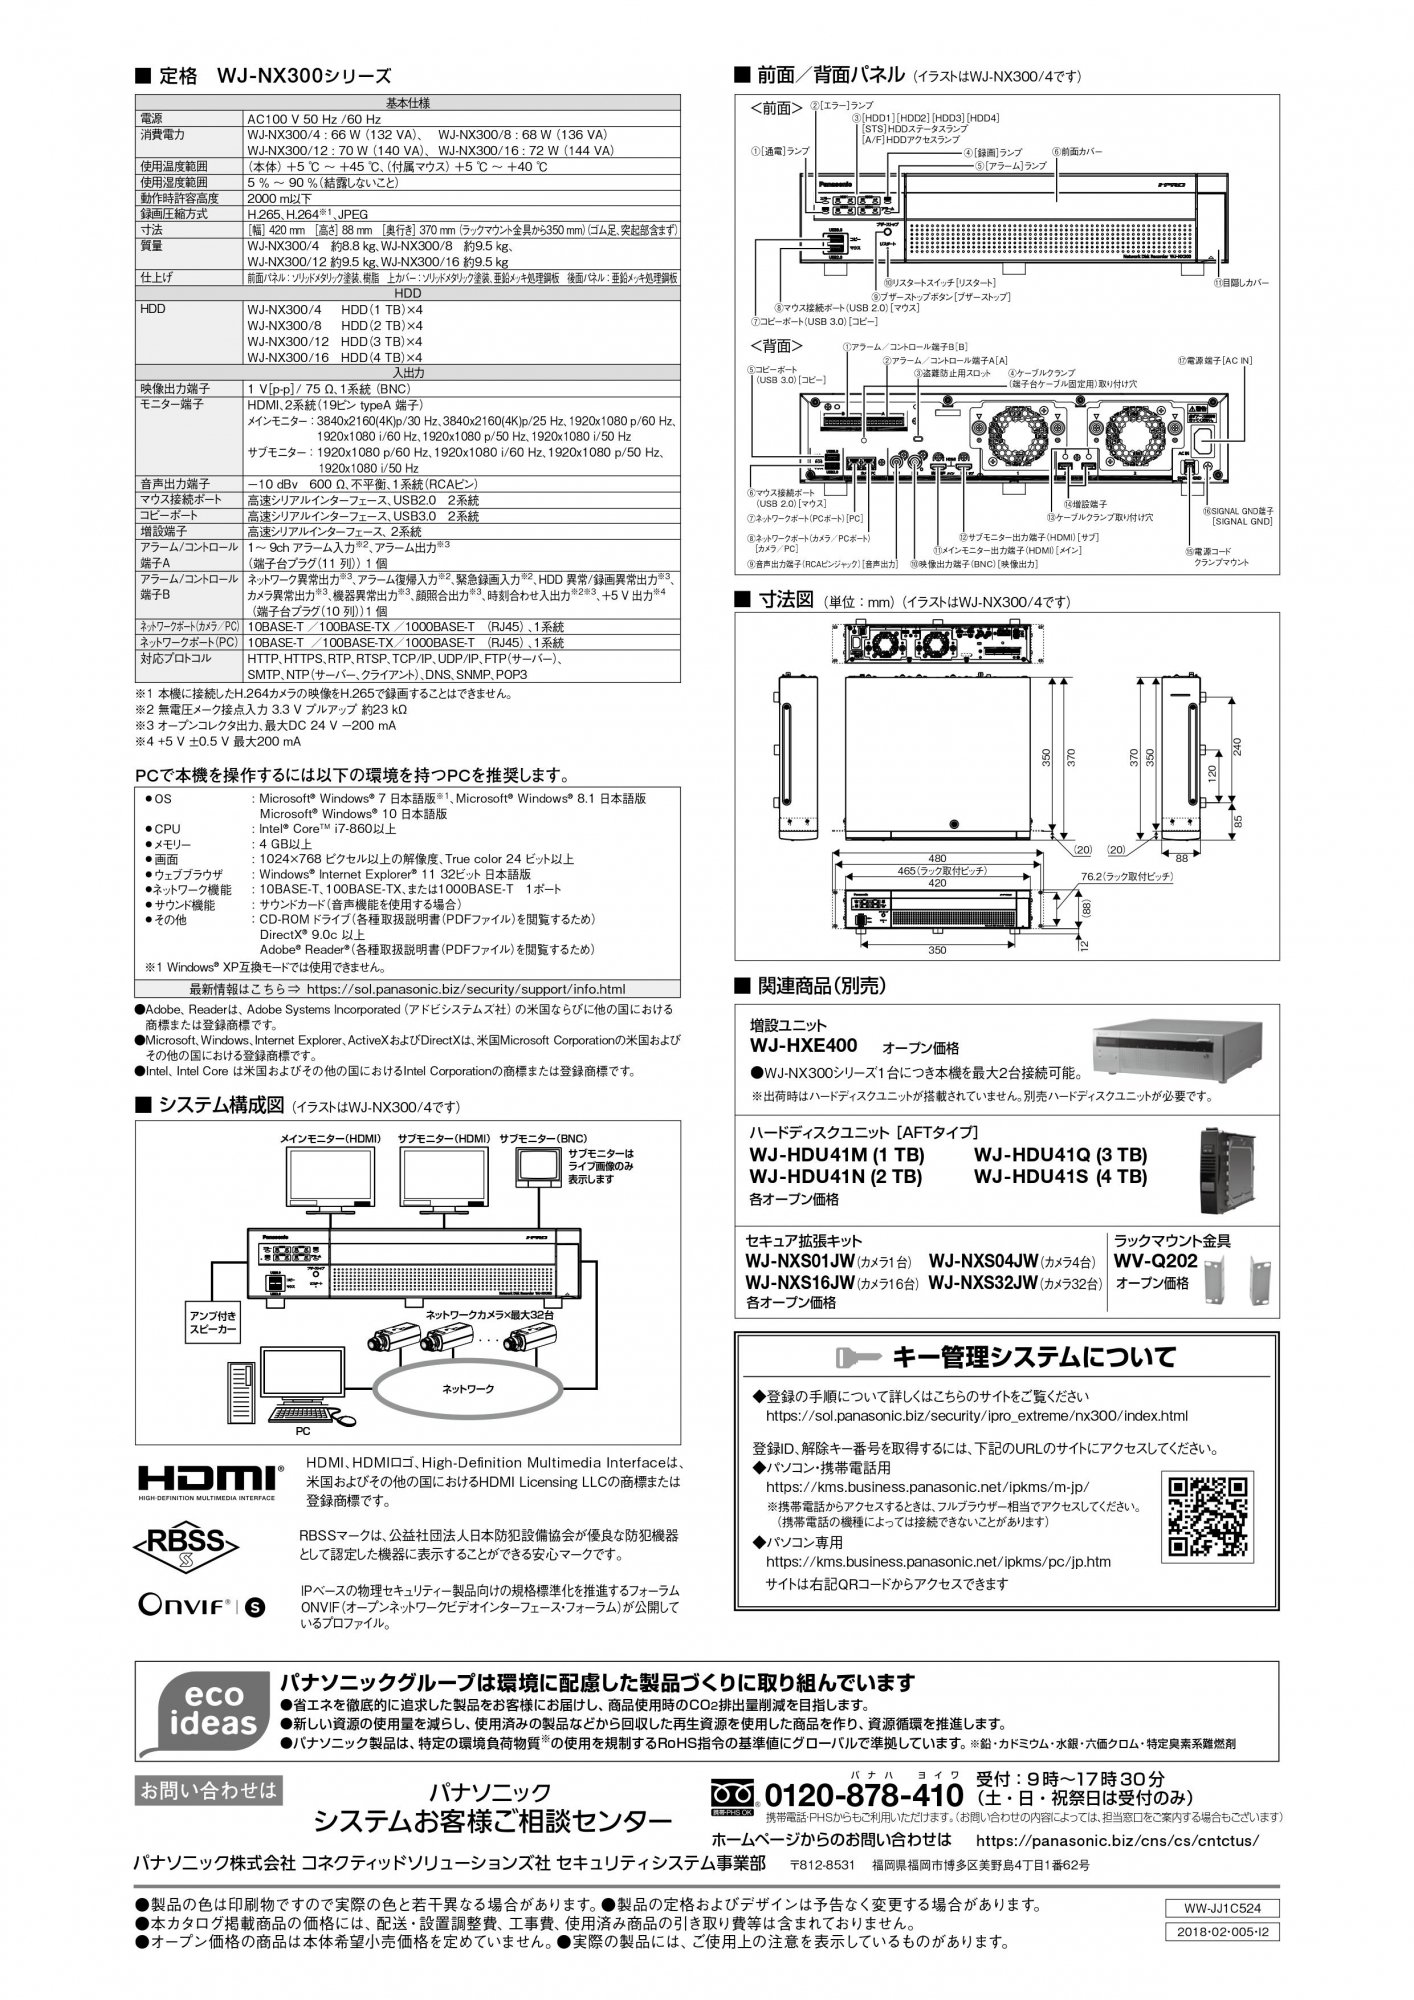 WJ-NX300/4 （HDD 4TB） 御取り寄せ商品 Panasonic HDDレコーダー